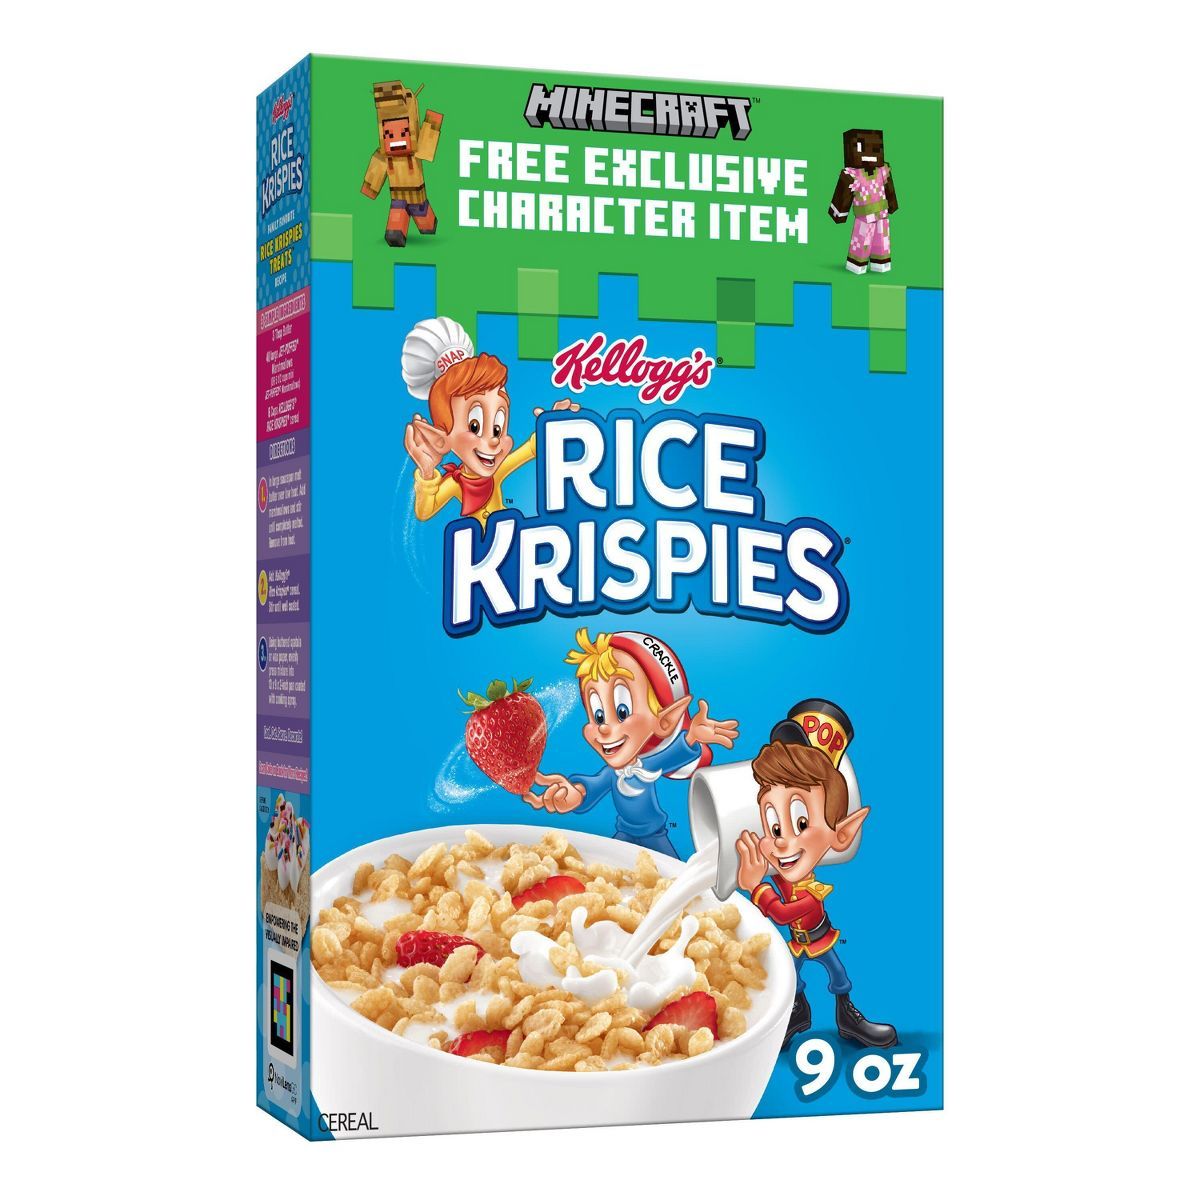 Kellogg's Rice Krispies - 9oz | Target